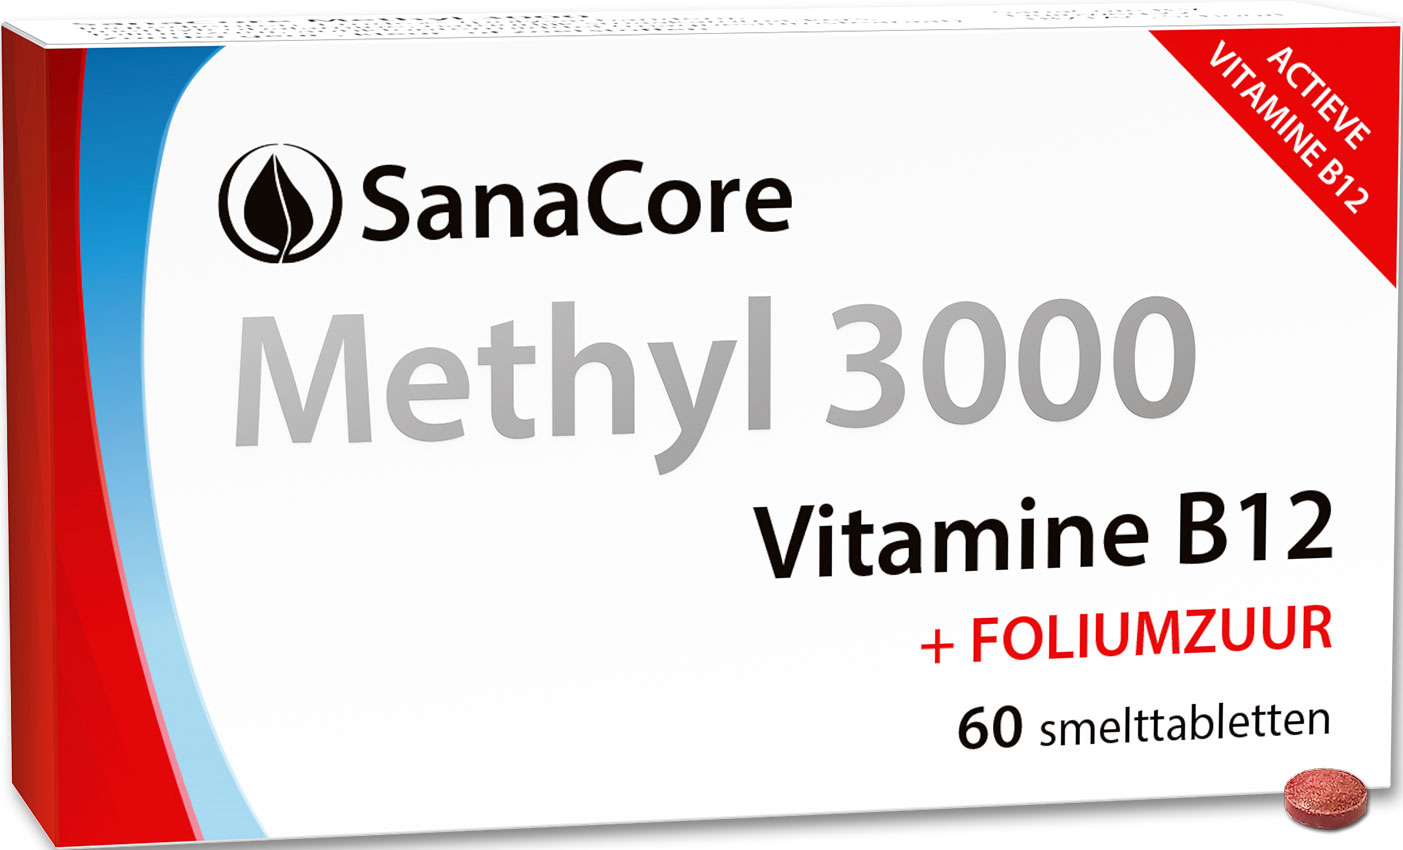 Methyl 3000